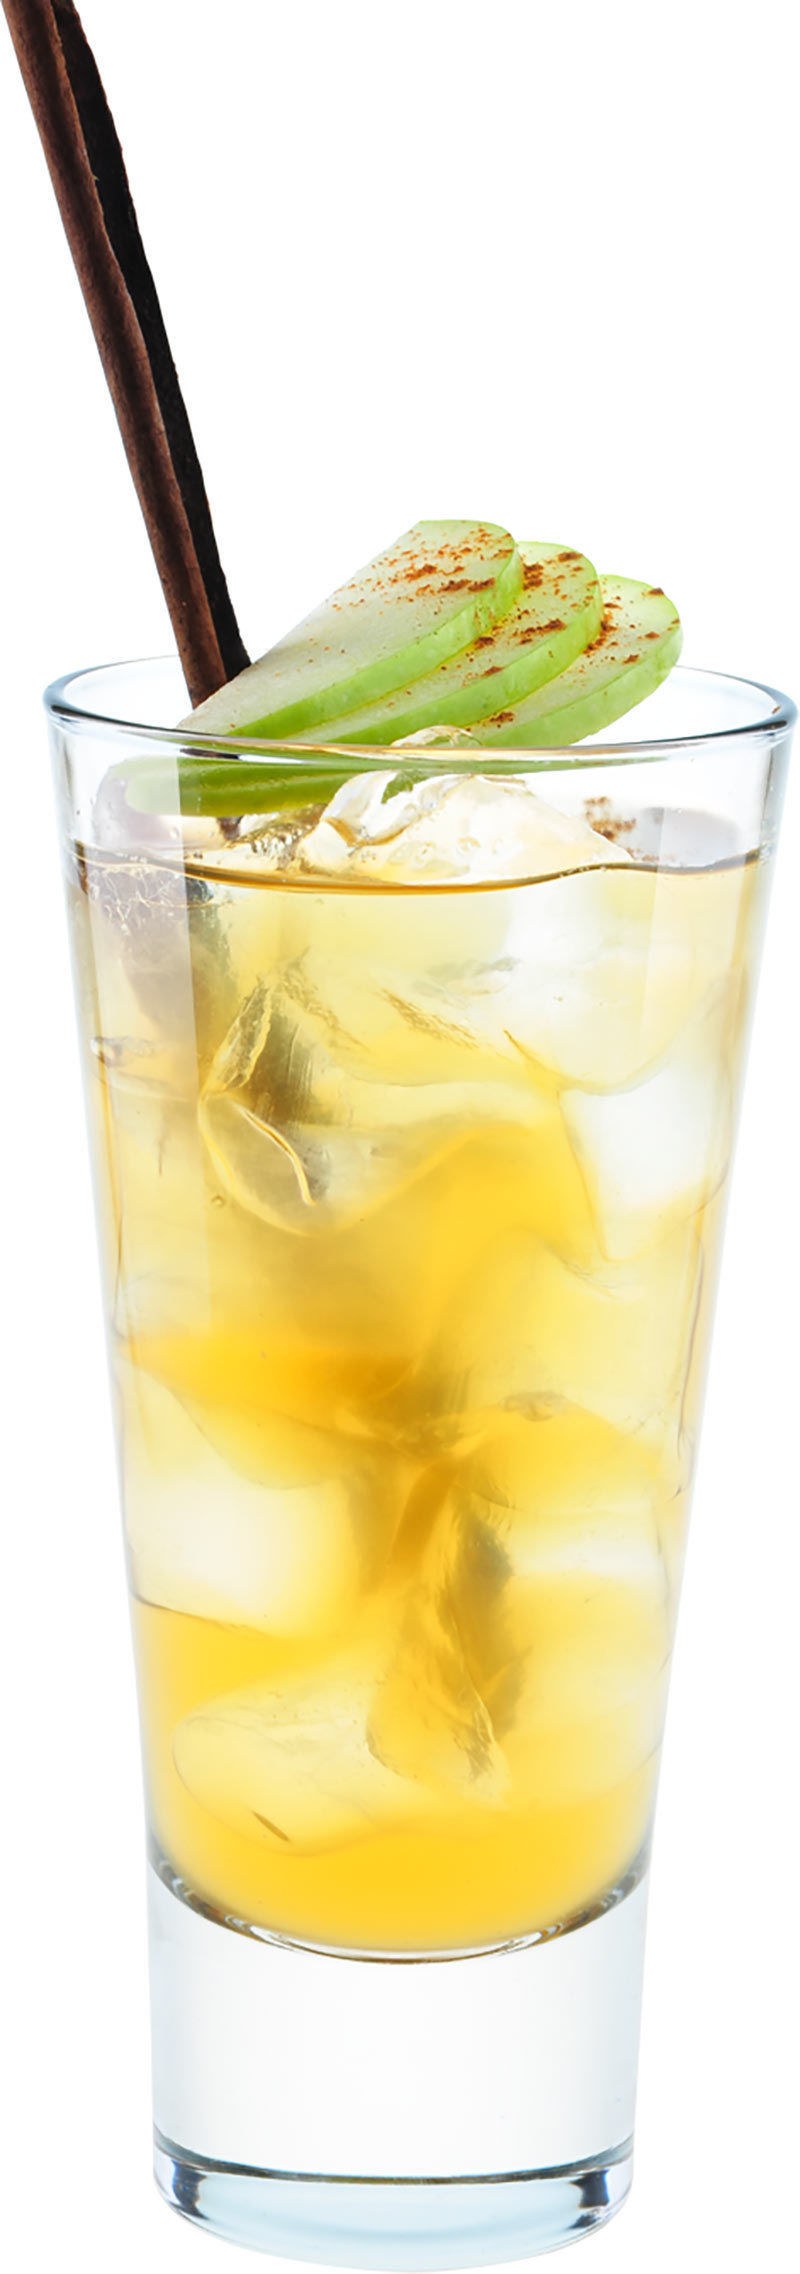 Рецепт коктейля Виски яблочный сок